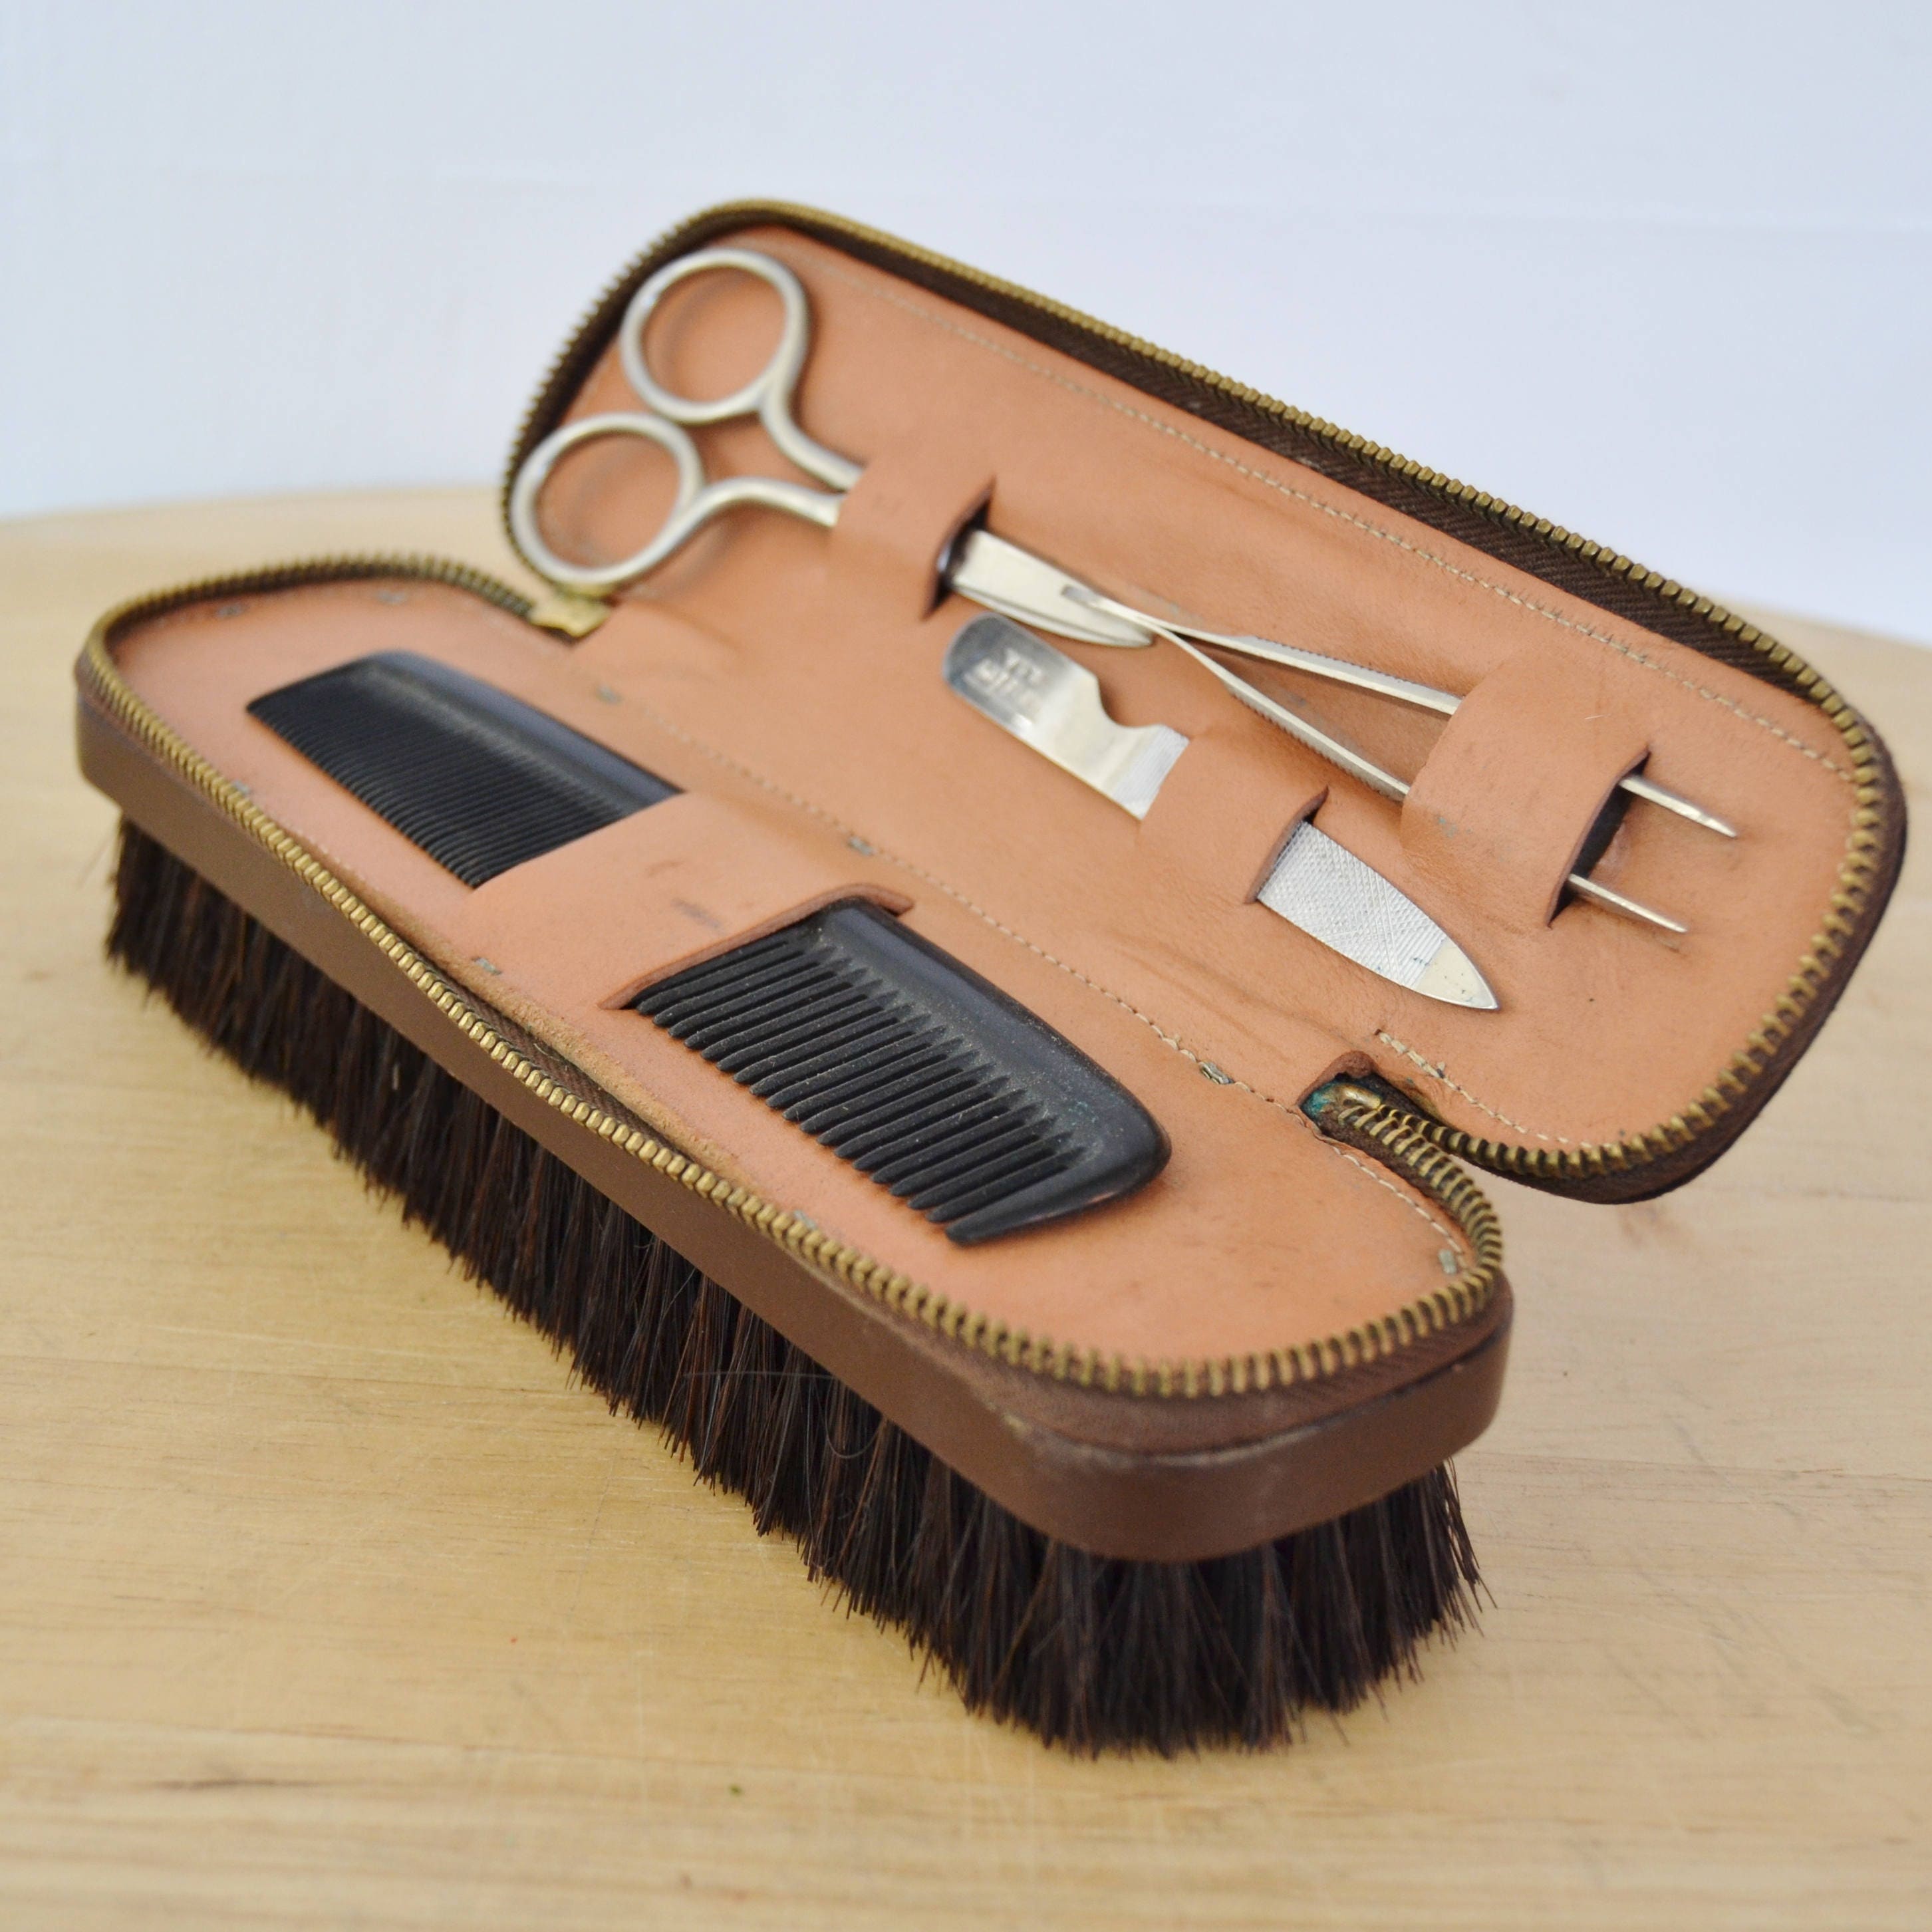 Vintage Reine Borsten Grooming Set, Brush, Nails, Tools. Leather, Germany.